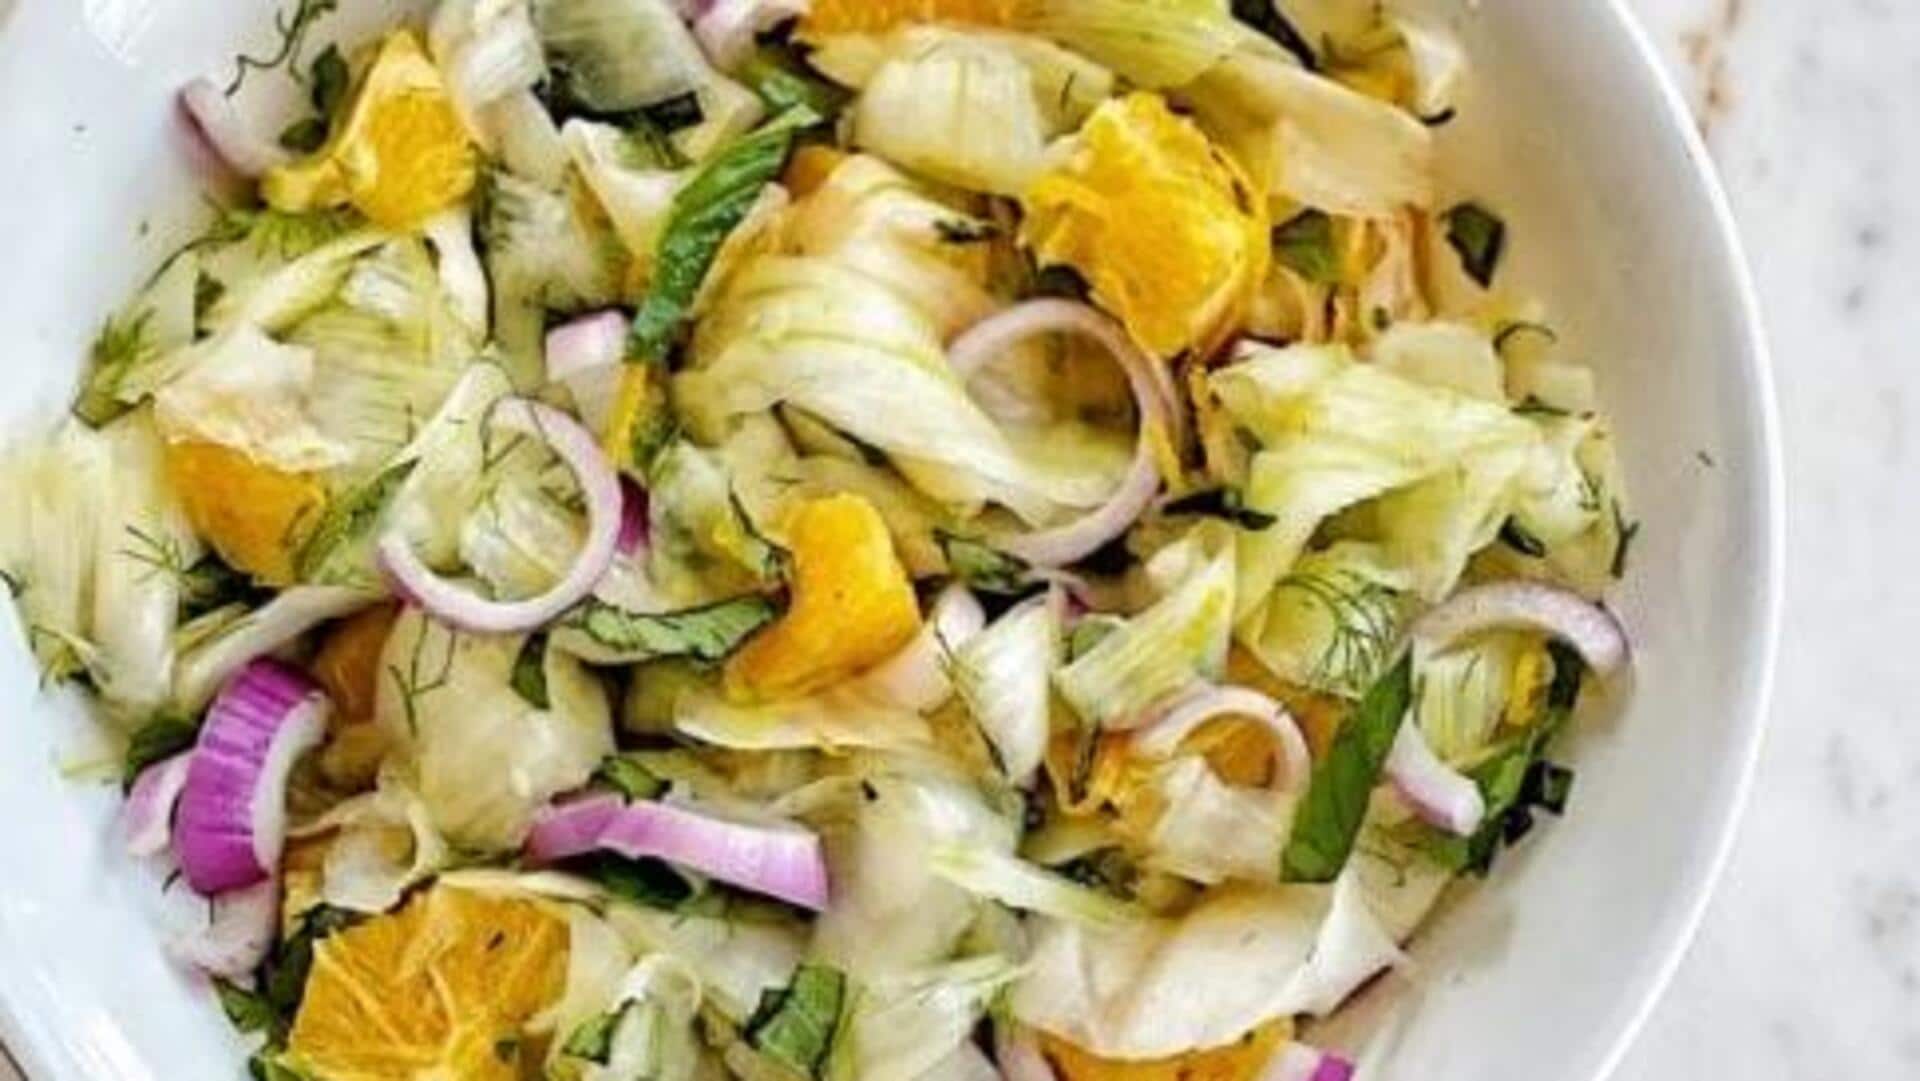 Health freaks will love this Sicilian orange fennel salad recipe